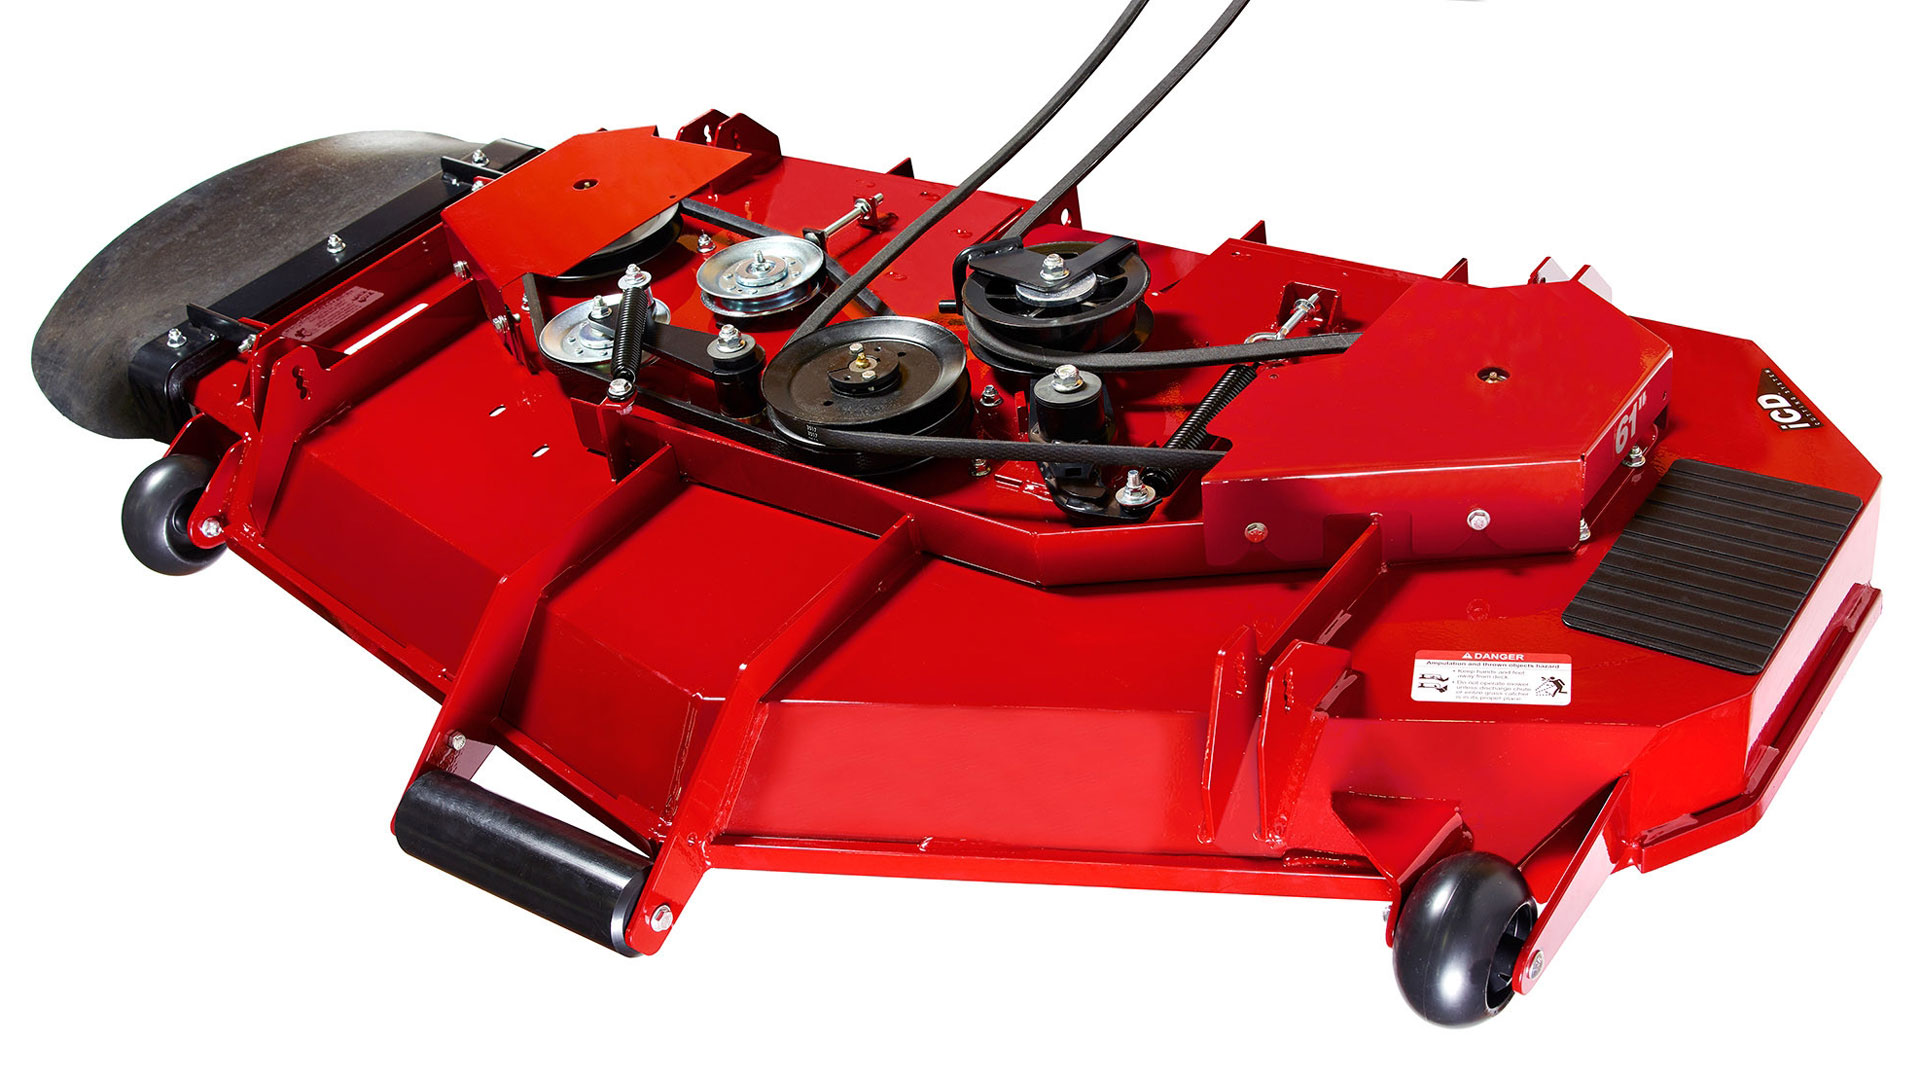 Ferris IS®6200 Zero Turn Mower - iCD™ Cutting System